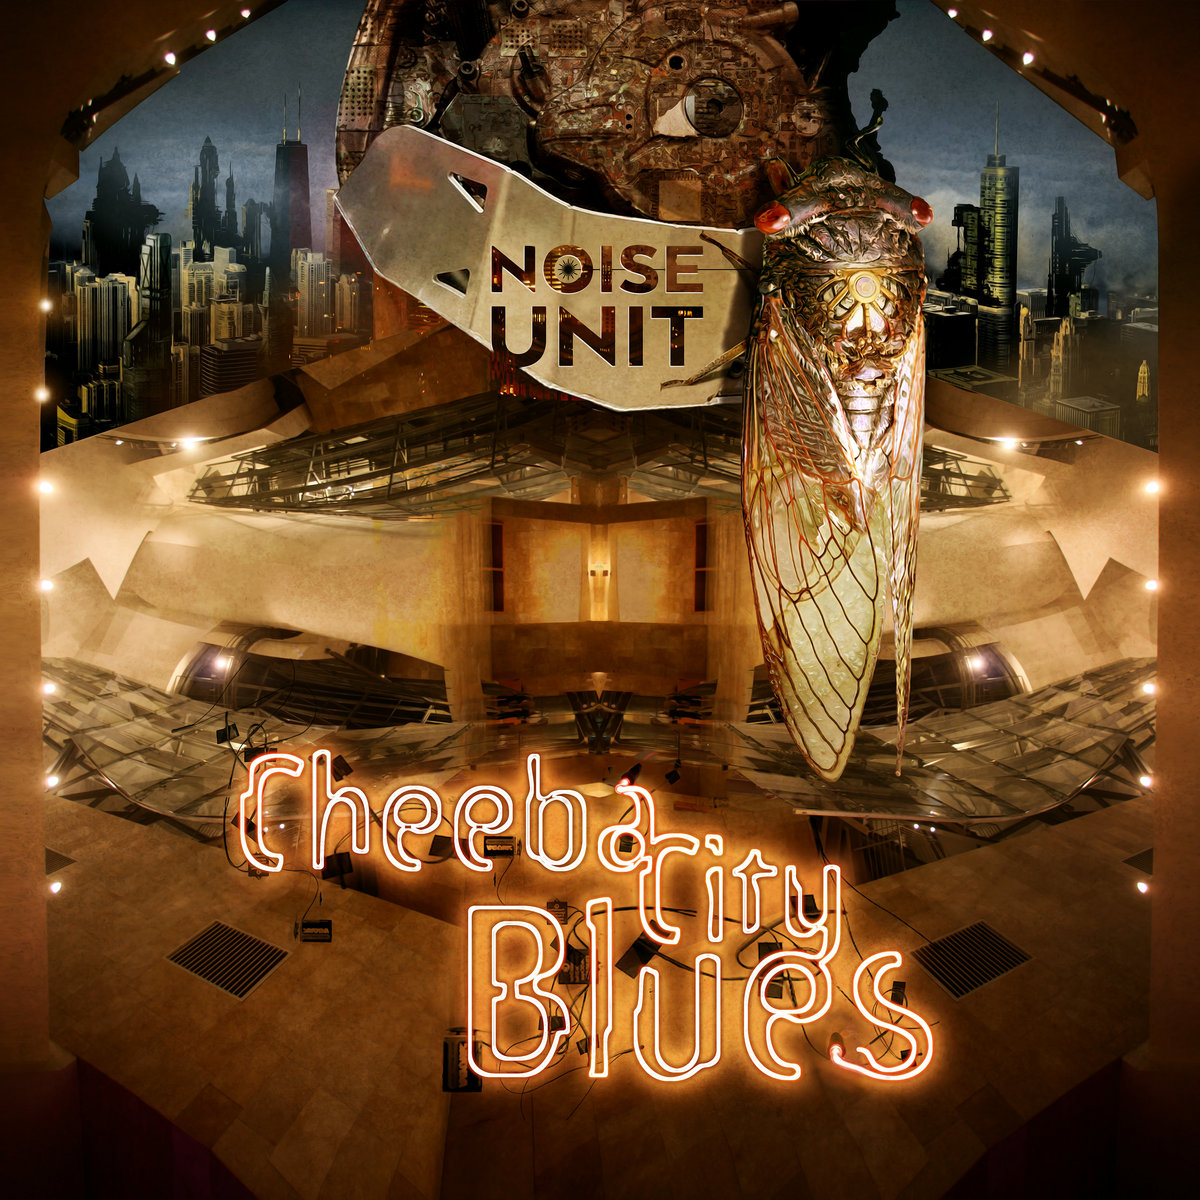 Noise Unit – Cheeba city blues (indus)